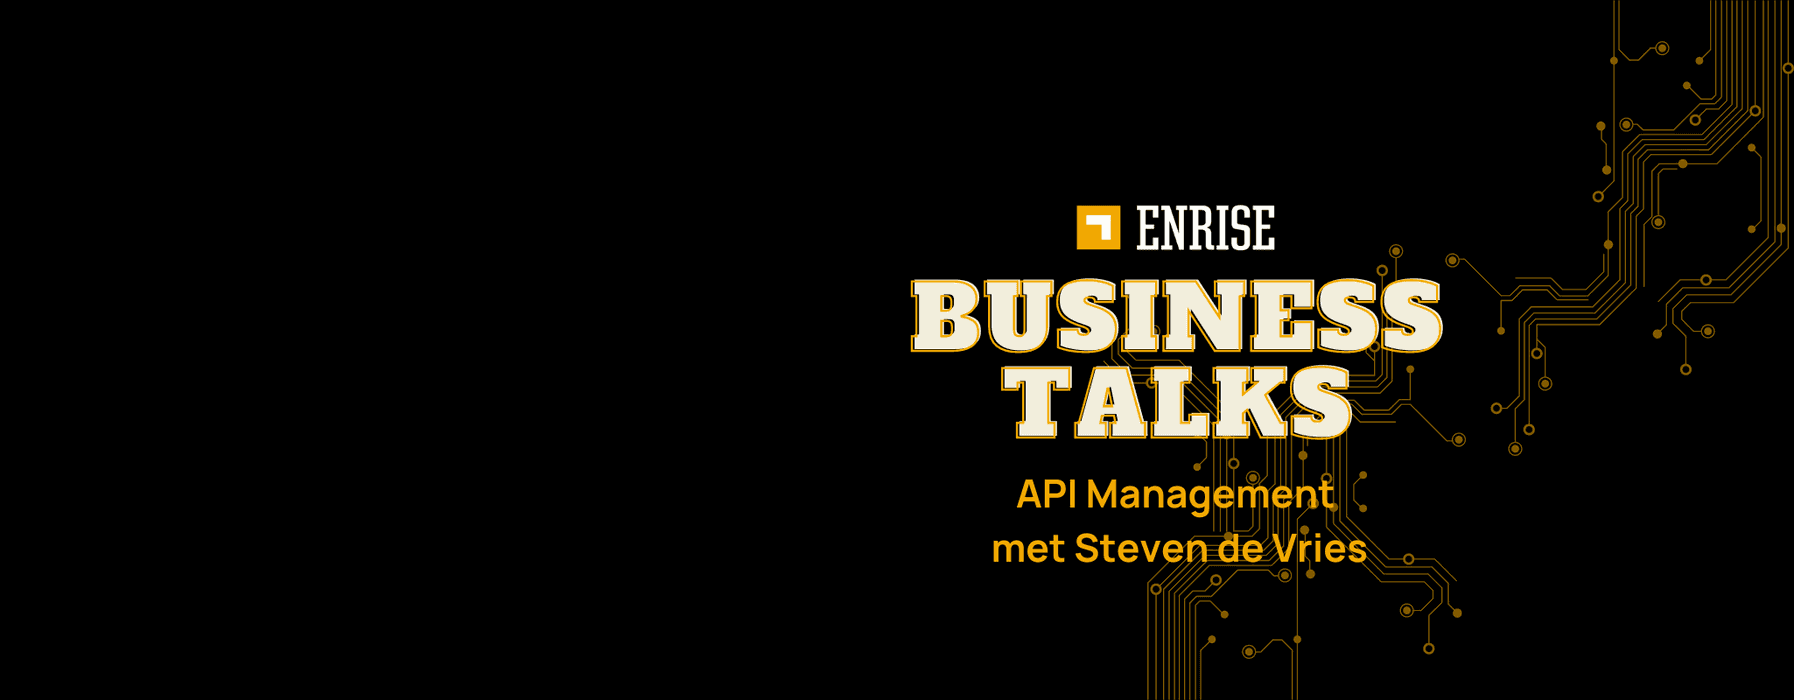 Enrise Business Talk over API Management met Steven de Vries